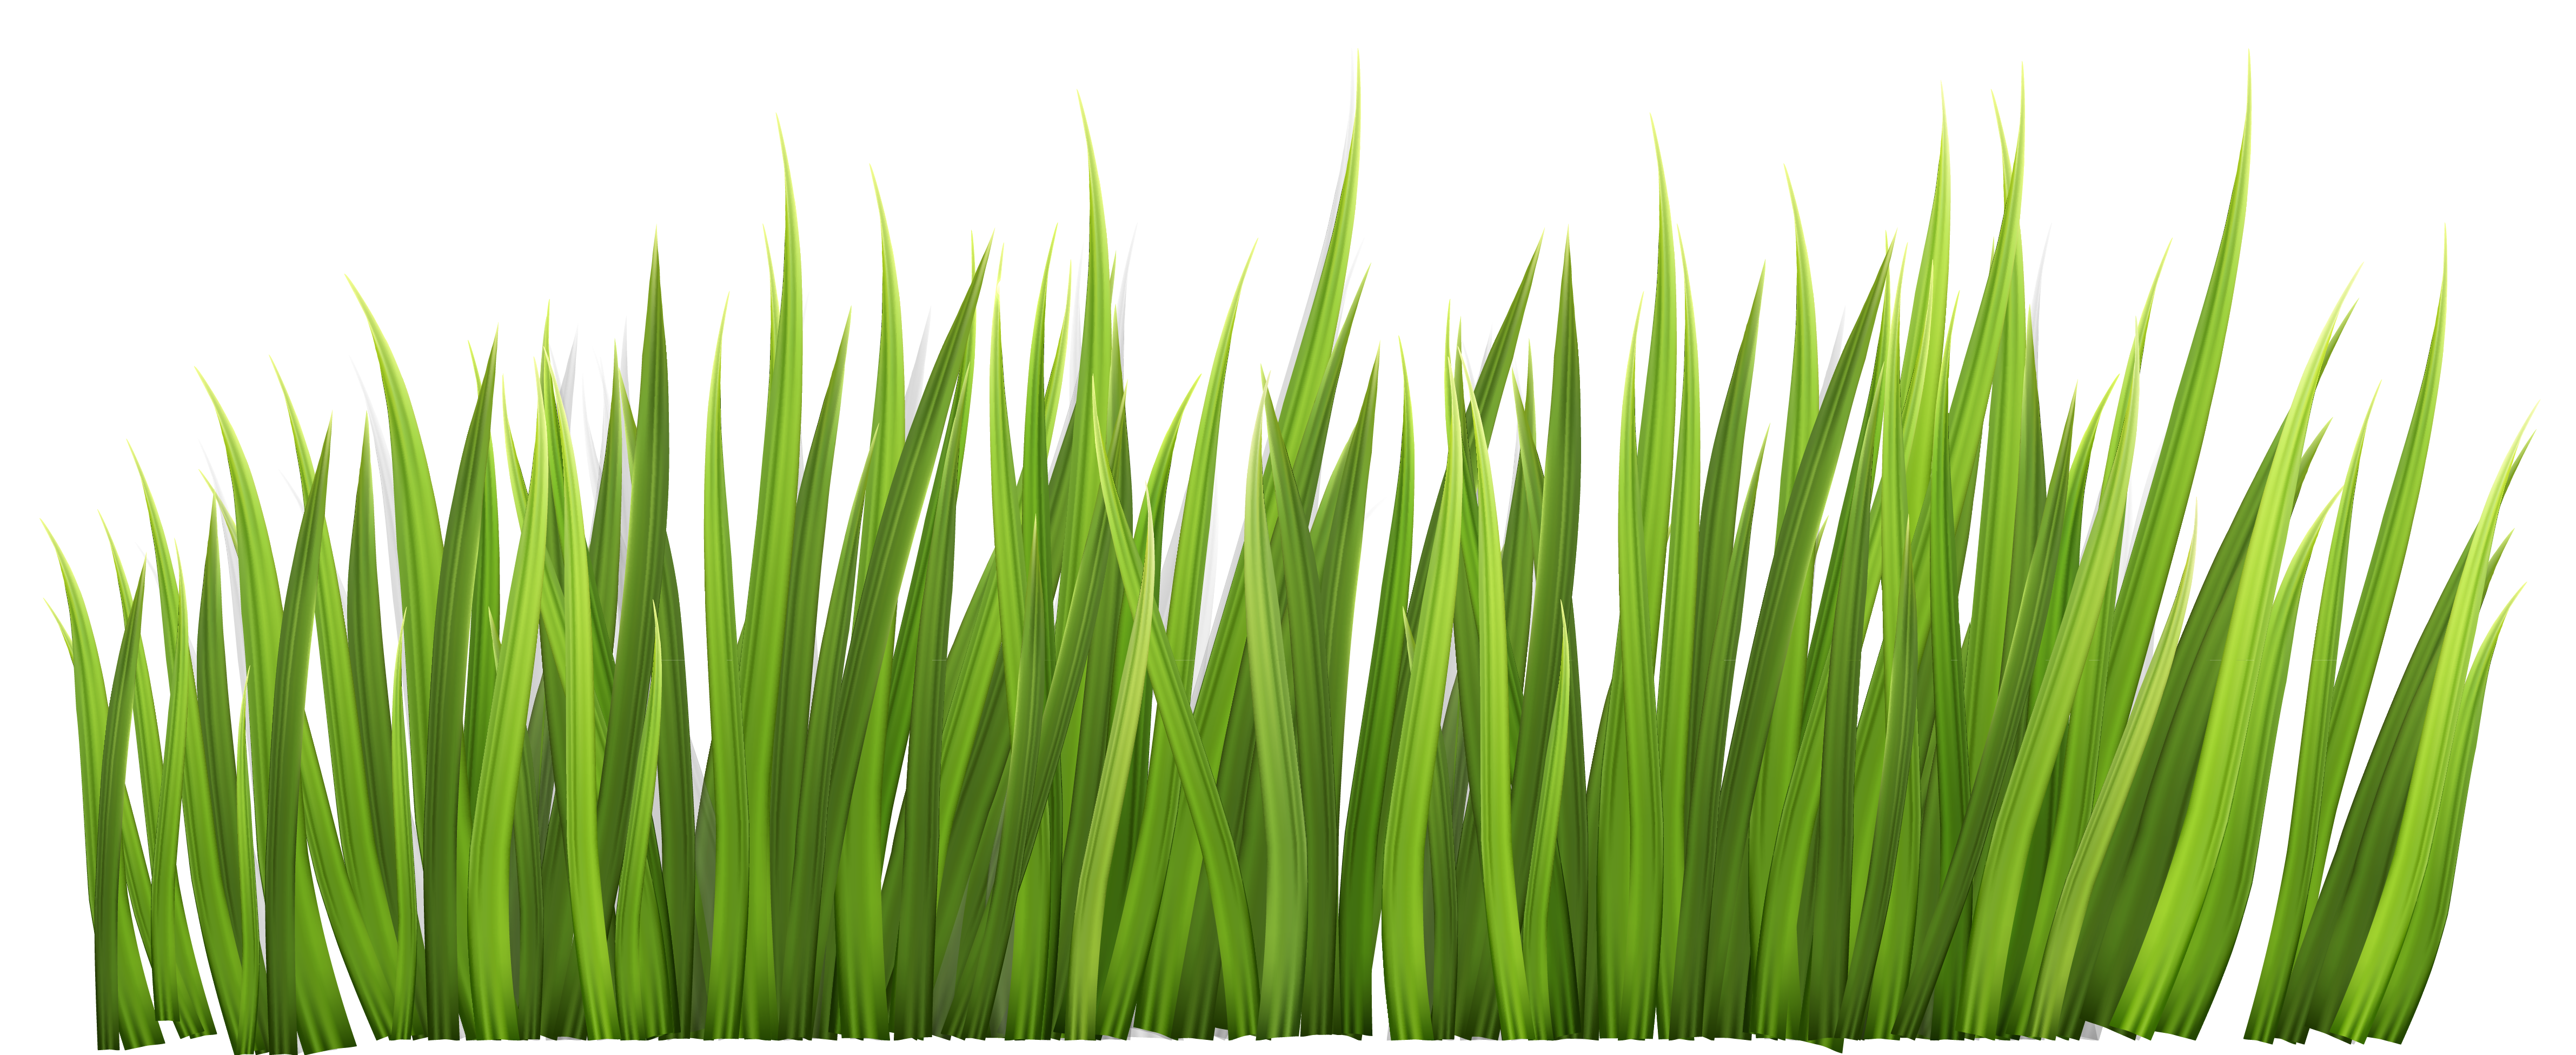 Grass clipart image green